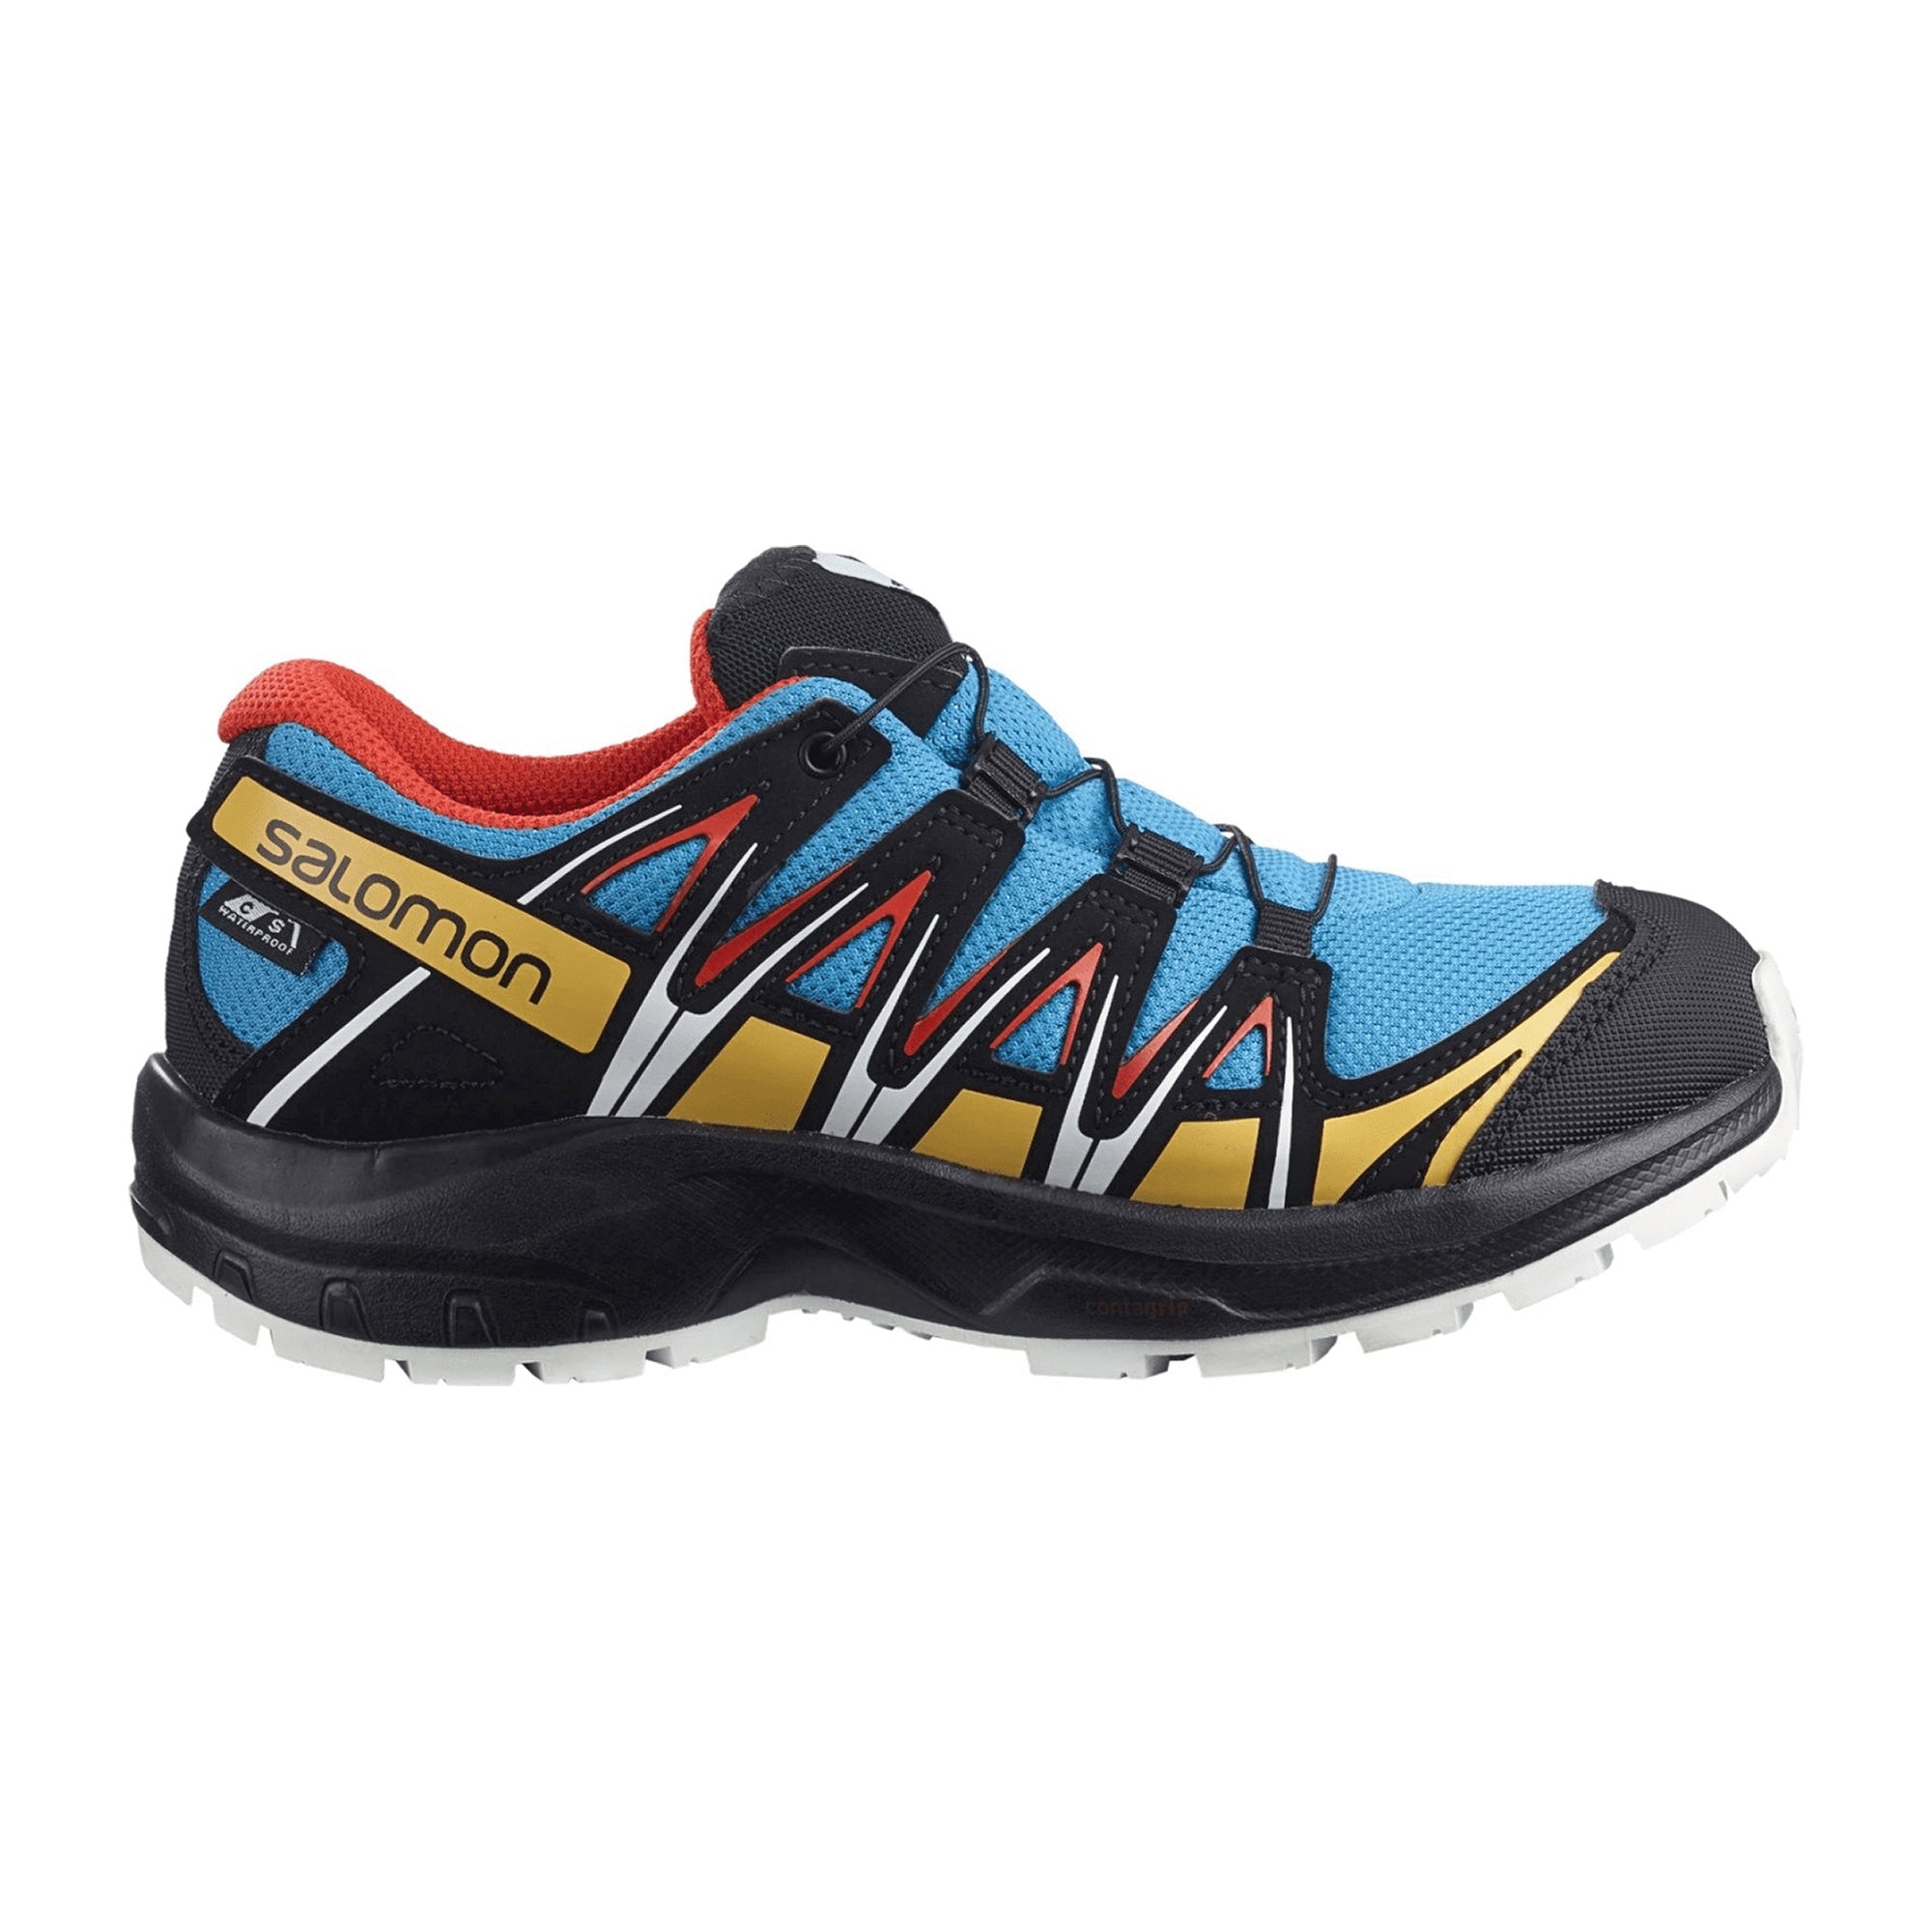 Salomon shoes XA PRO 3D CSWP J Hawaiian Oc for children, blue